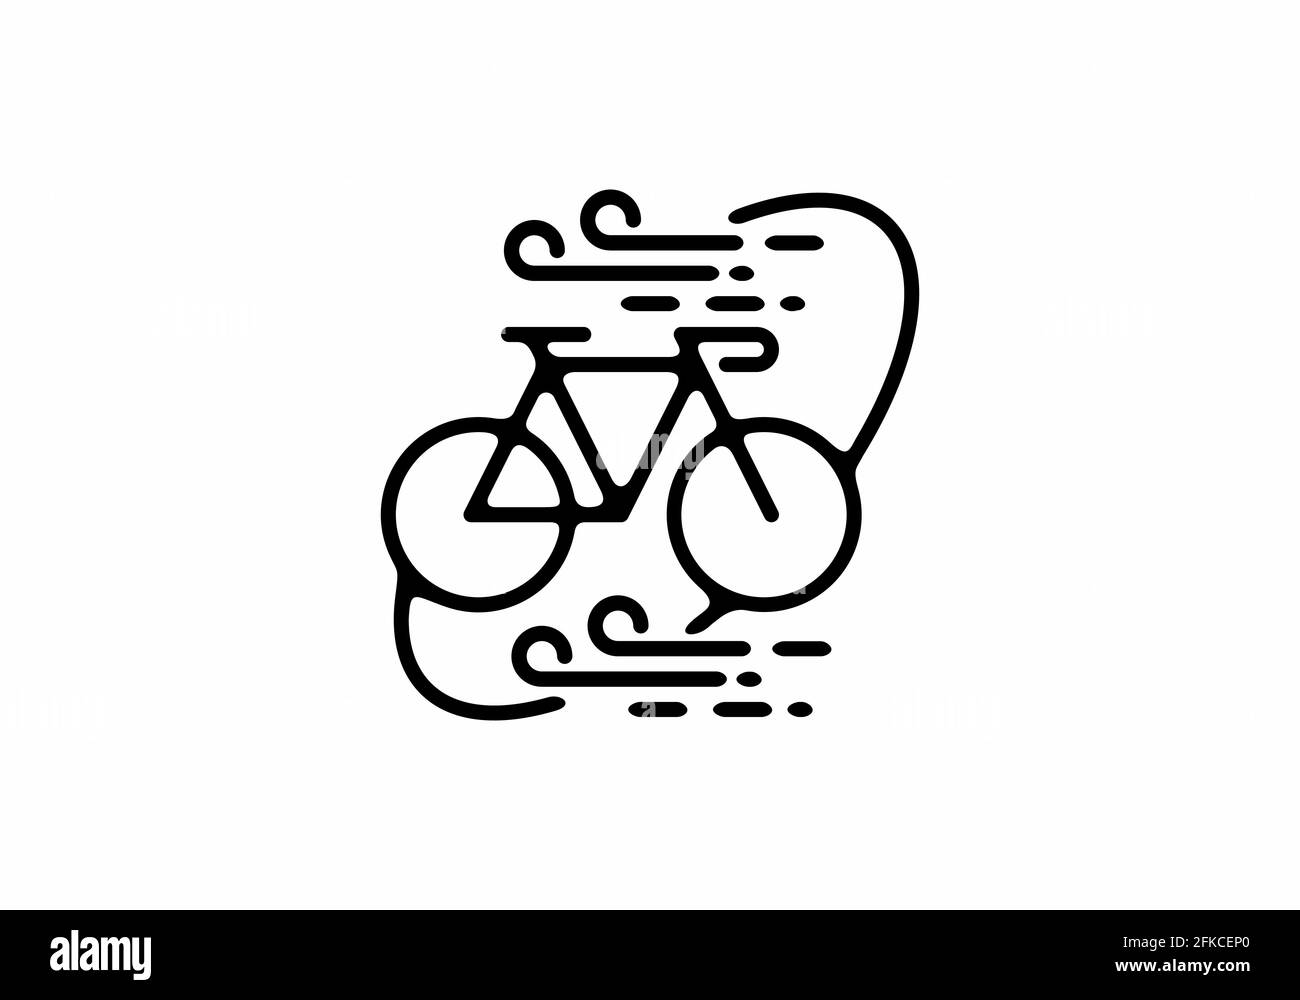 Schwarze Linie Kunst Illustration von Fahrrad in gekippter ovaler Form  Design Stock-Vektorgrafik - Alamy